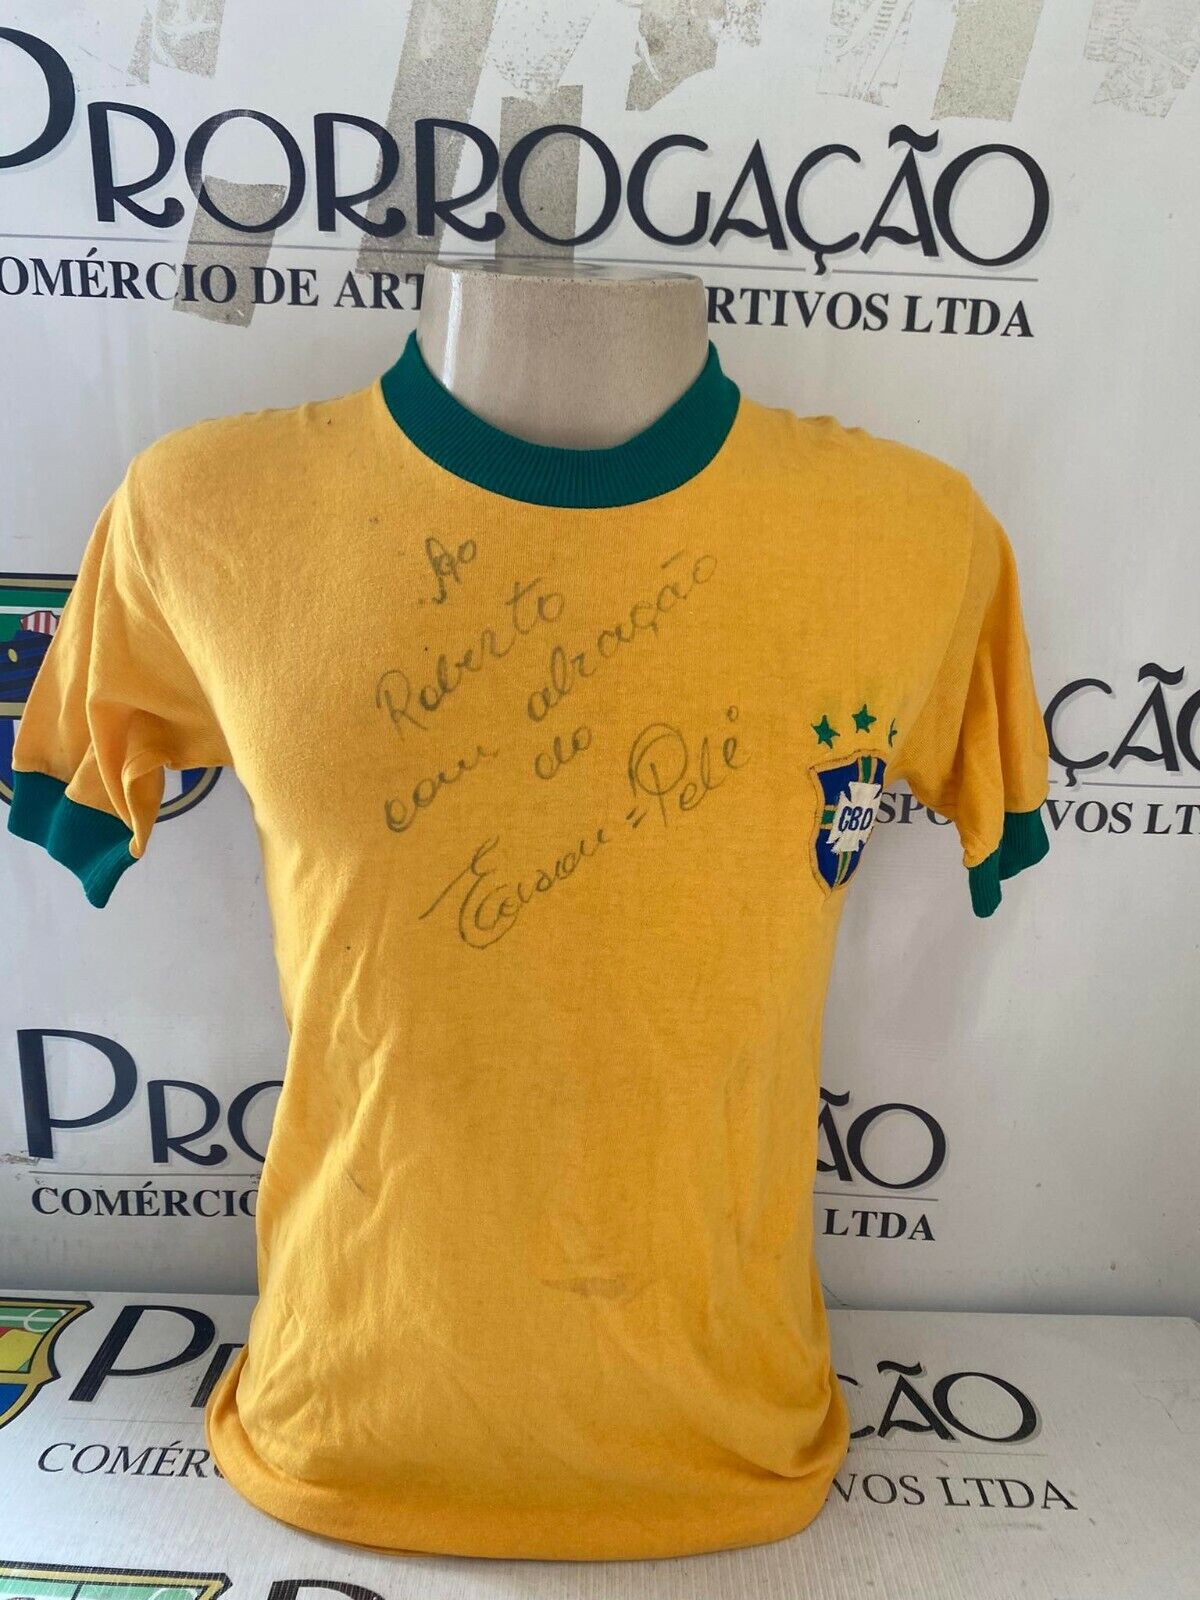 Pele signed shirt